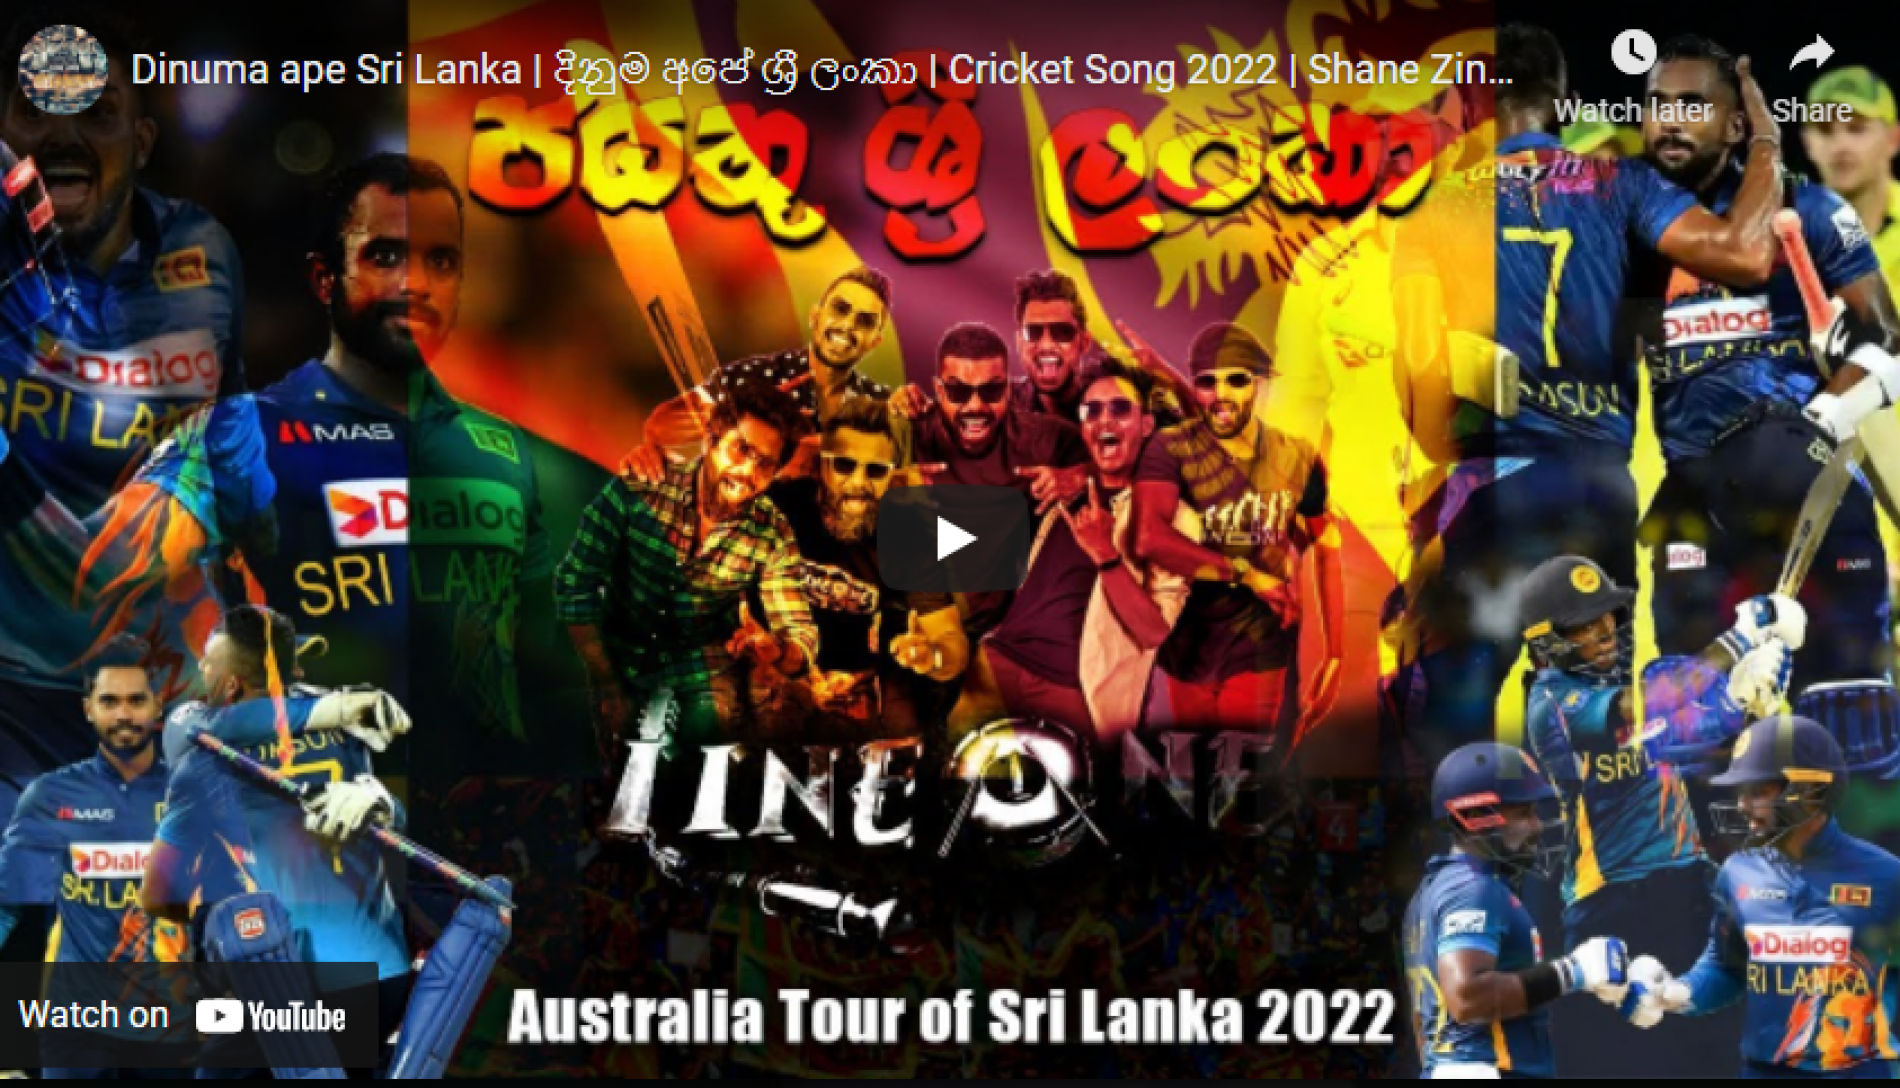 New Music : Dinuma Ape Sri Lanka | දිනුම අපේ ශ්‍රී ලංකා | Cricket Song 2022 | Shane Zing with LineOne Band